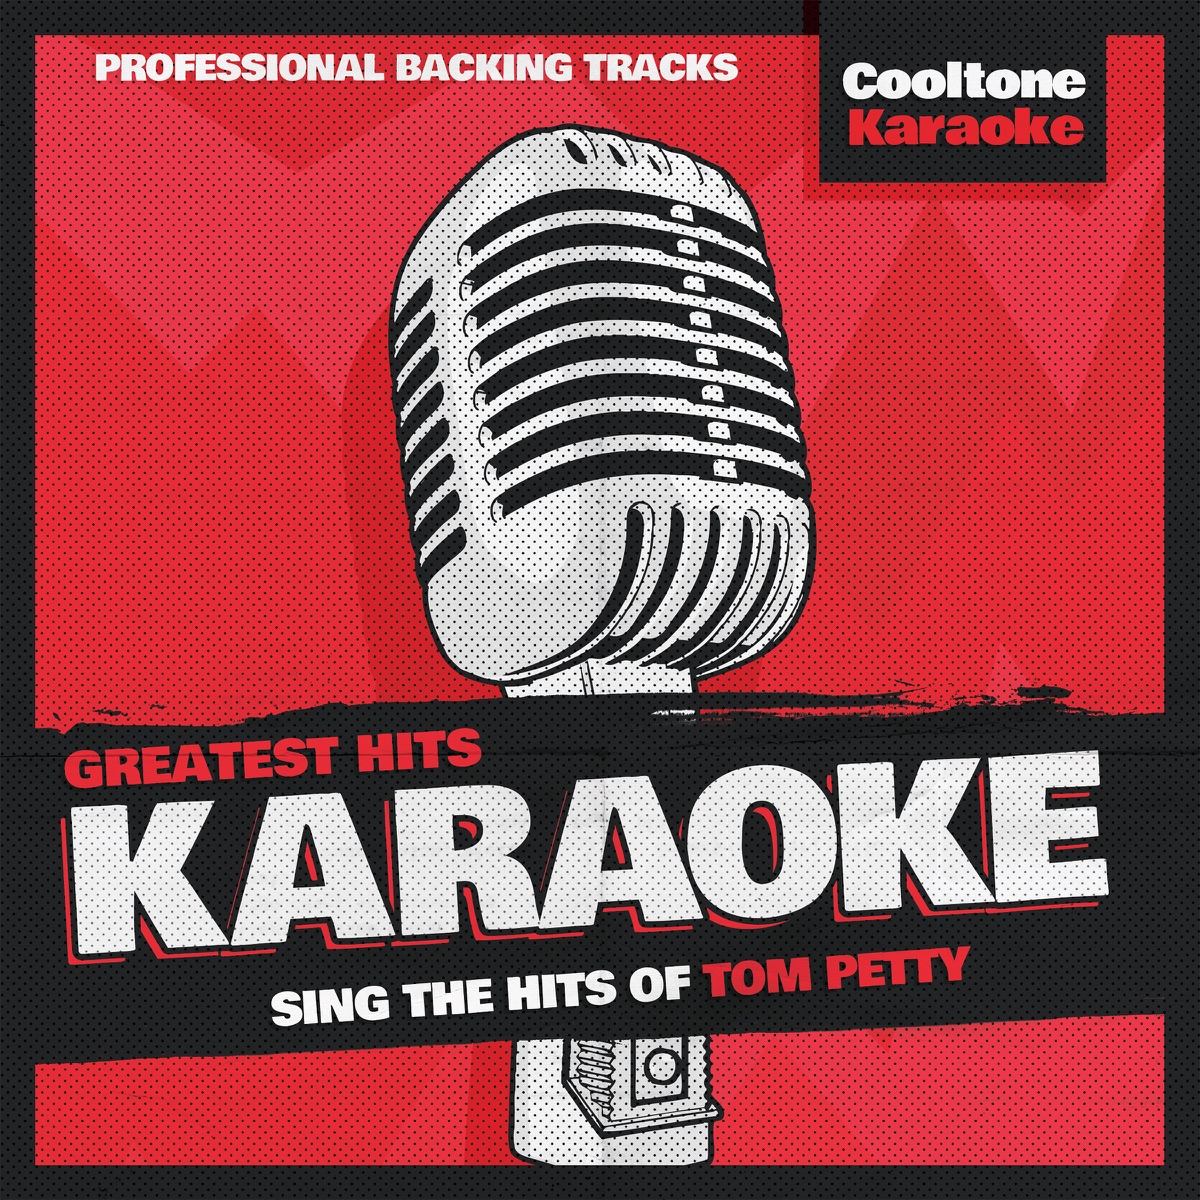 Greatest Hits Karaoke: The Rolling Stones by Cooltone Karaoke on Apple Music